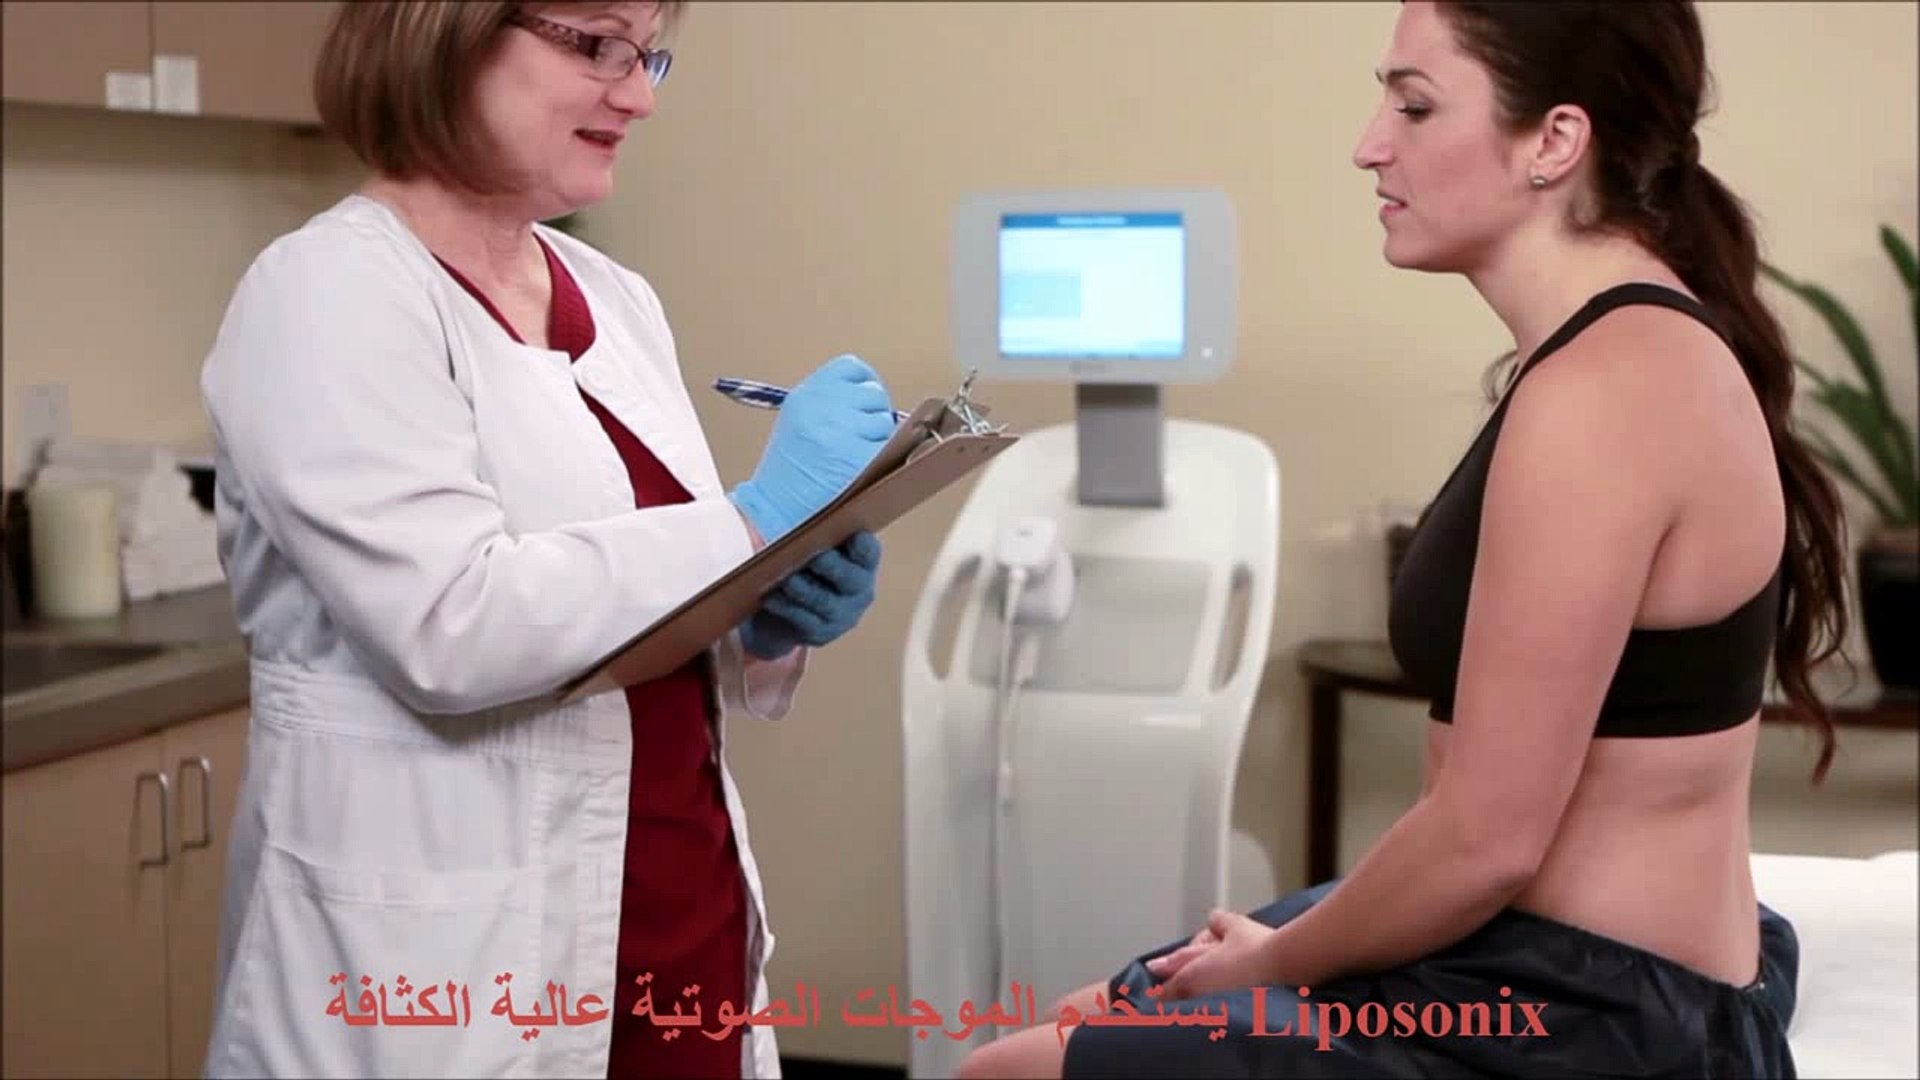 Liposonix Treatment Video - SOLTA MEDICAL® (A Division of Valeant Aesthetics) with Arabic subtitle